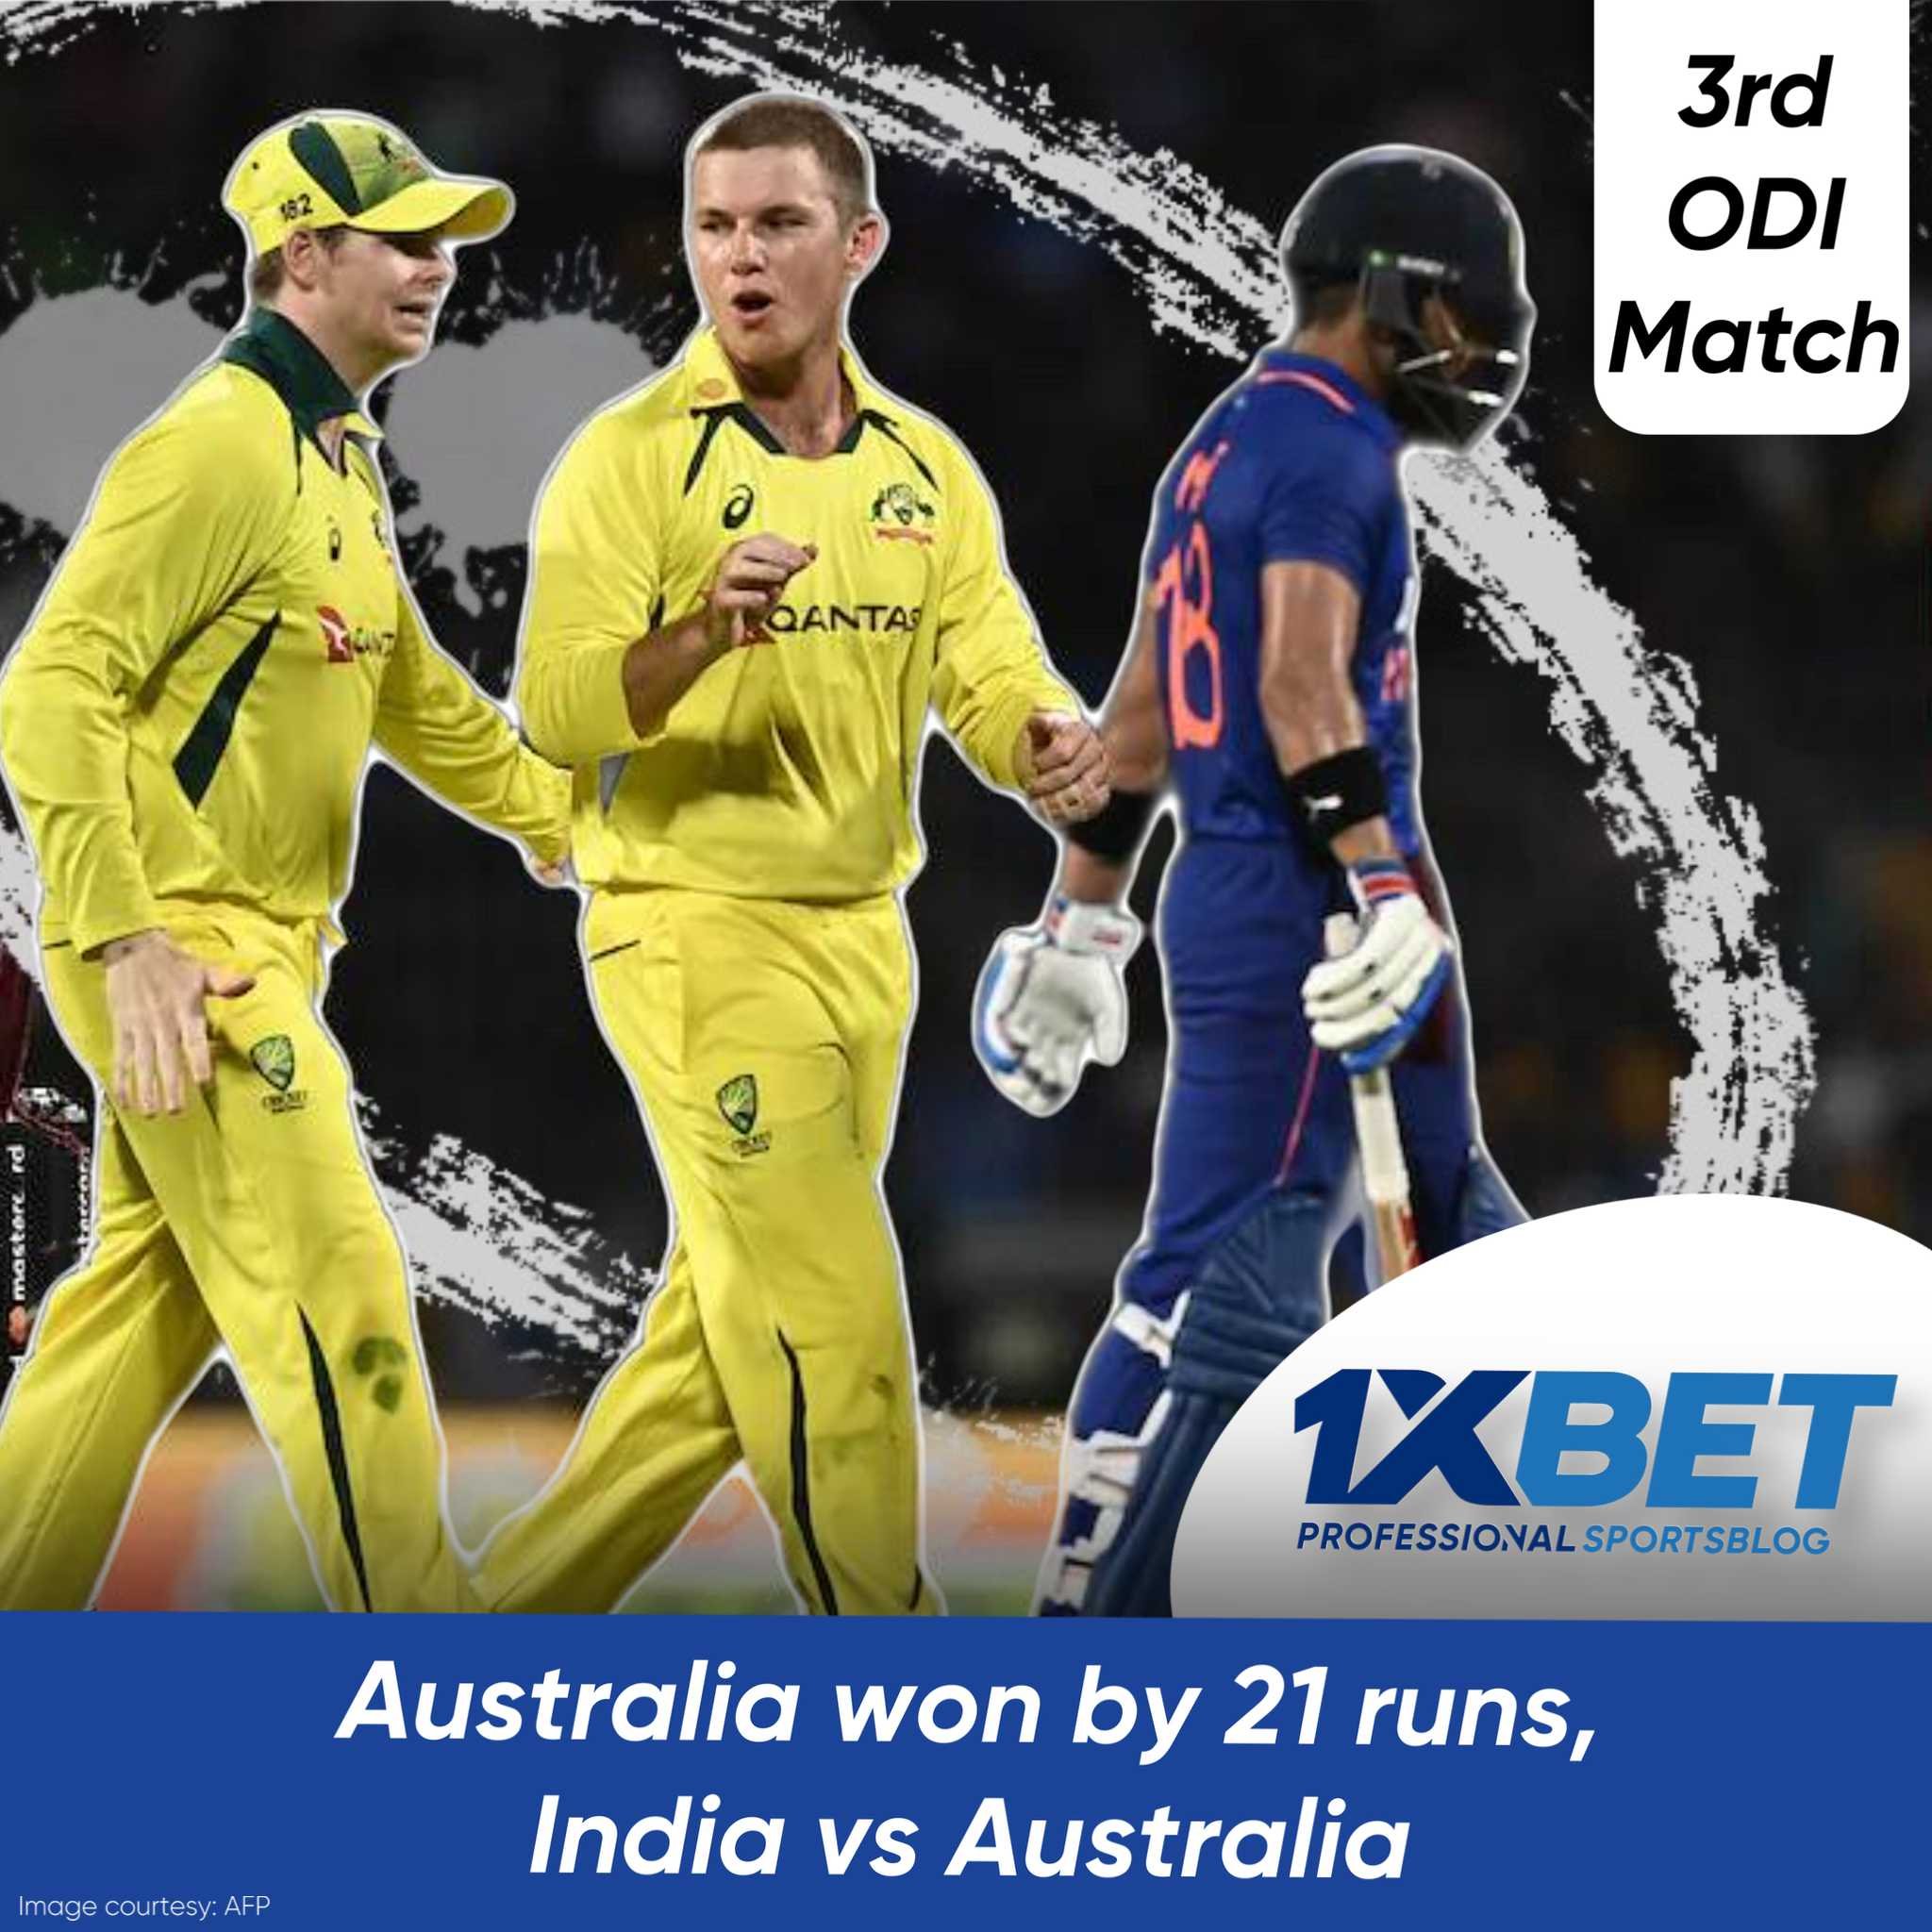 Australia won by 21 runs